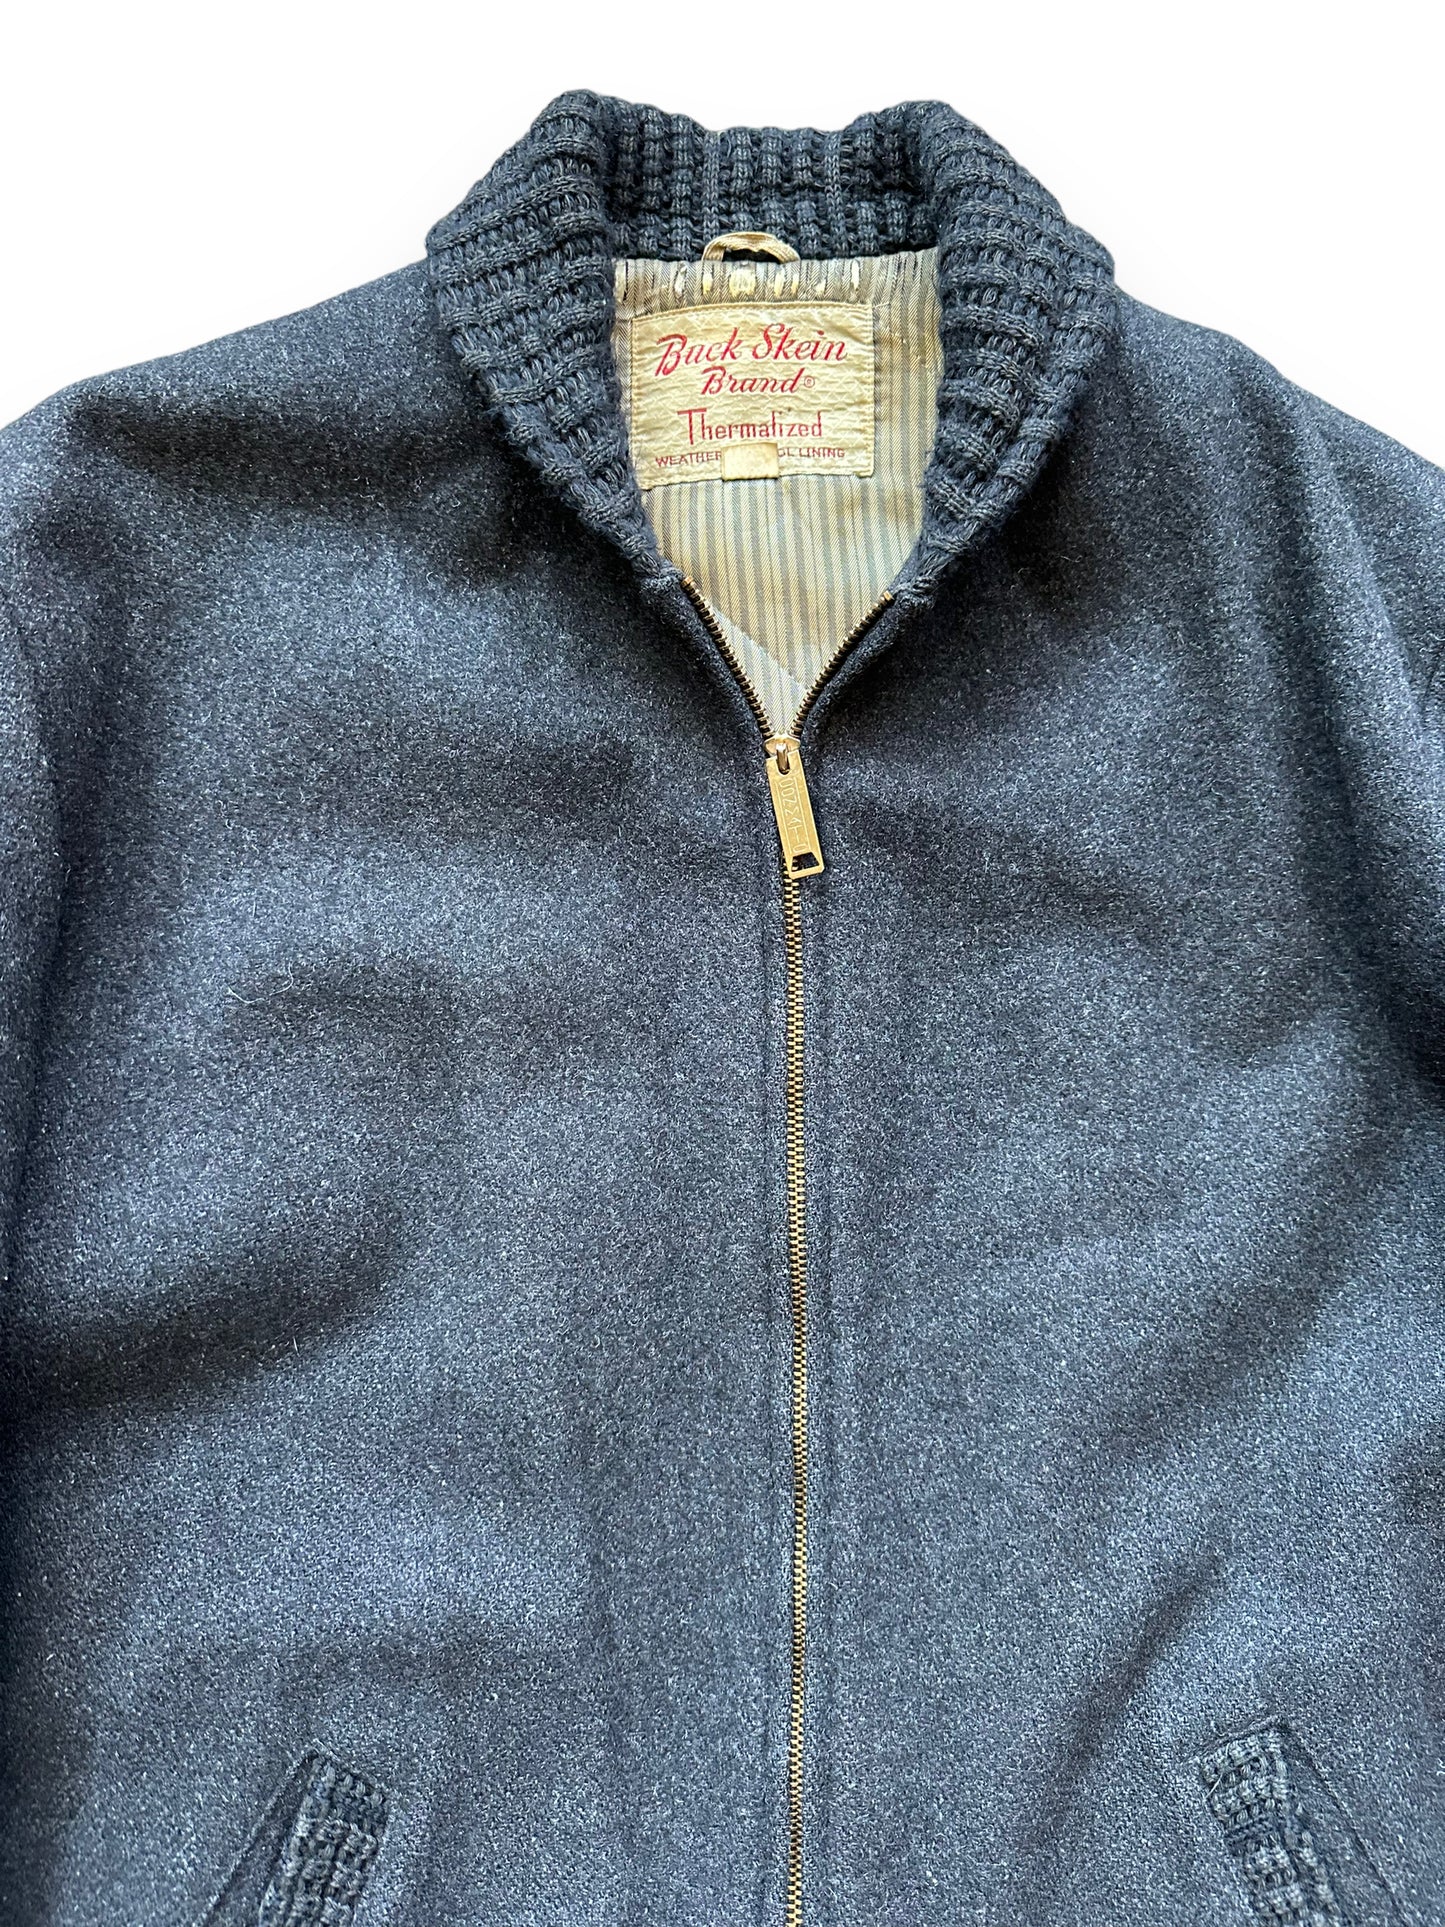 Upper Front View of Vintage Buck Skein Clicker Jacket SZ 42 |  Barn Owl Vintage Goods | Vintage Clicker Coat Seattle